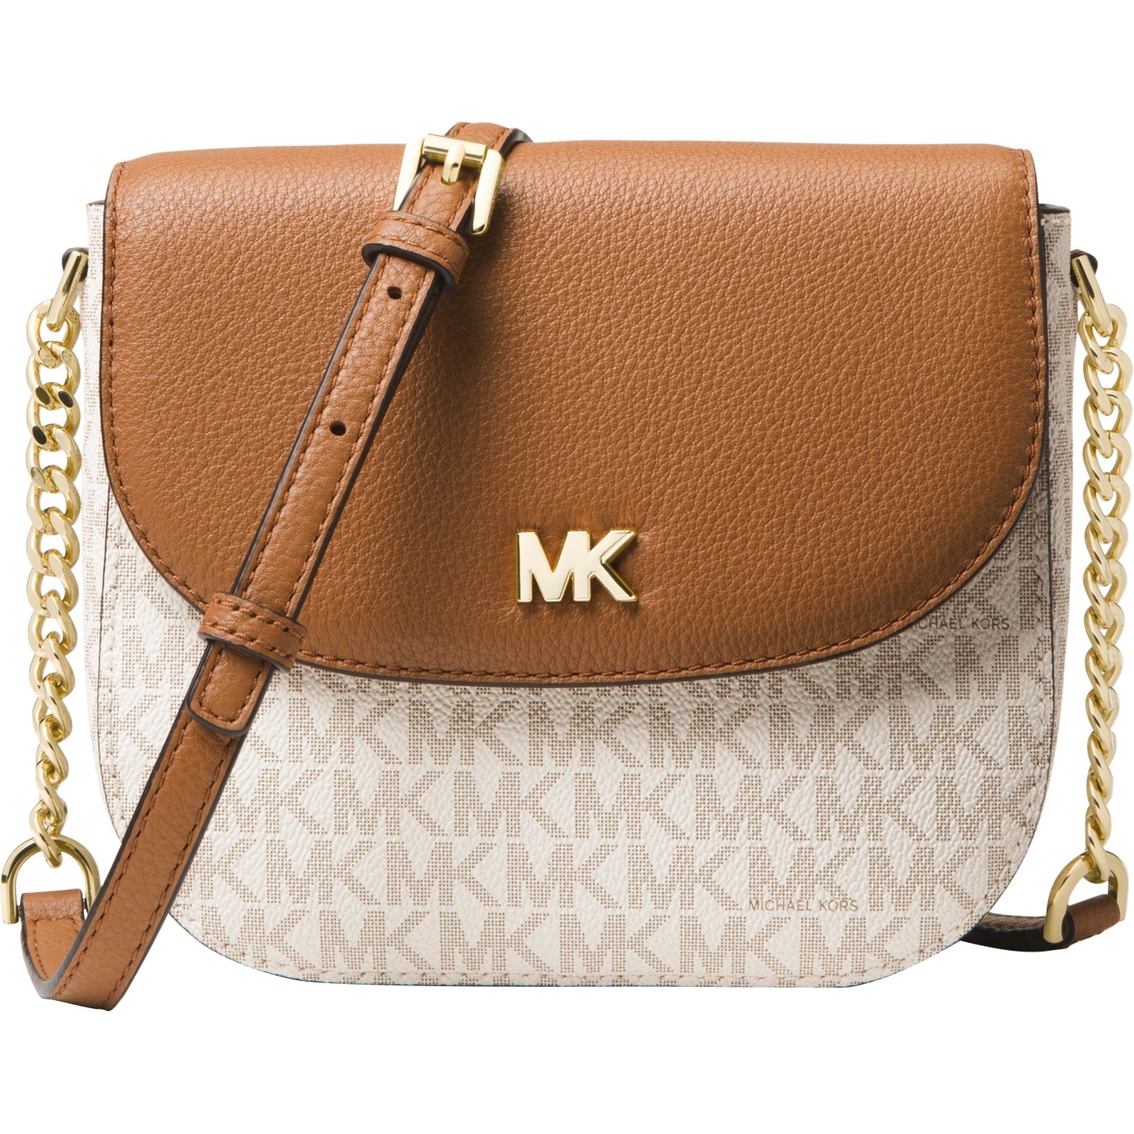 mk purse handbag